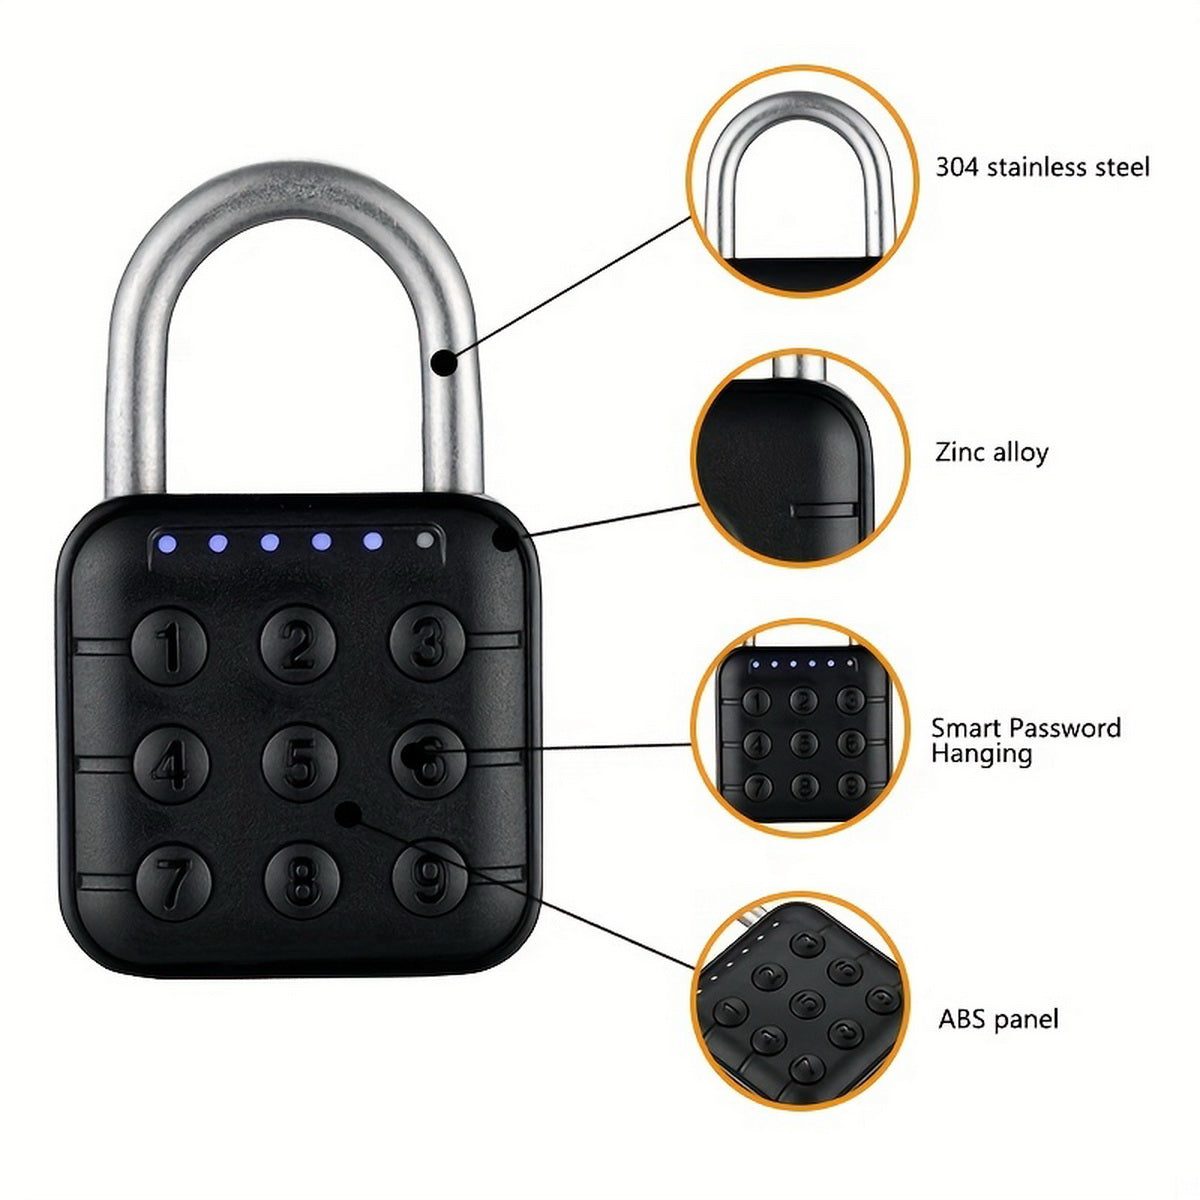 Smart Padlock With Digit Button, Locker Locker, Keyless Door Lock, Digital Button Locks For Gym Locker, School Locker, Lugguage, Backpack, Suitcase, Tool Box, IP67 Waterproof Pad Lock